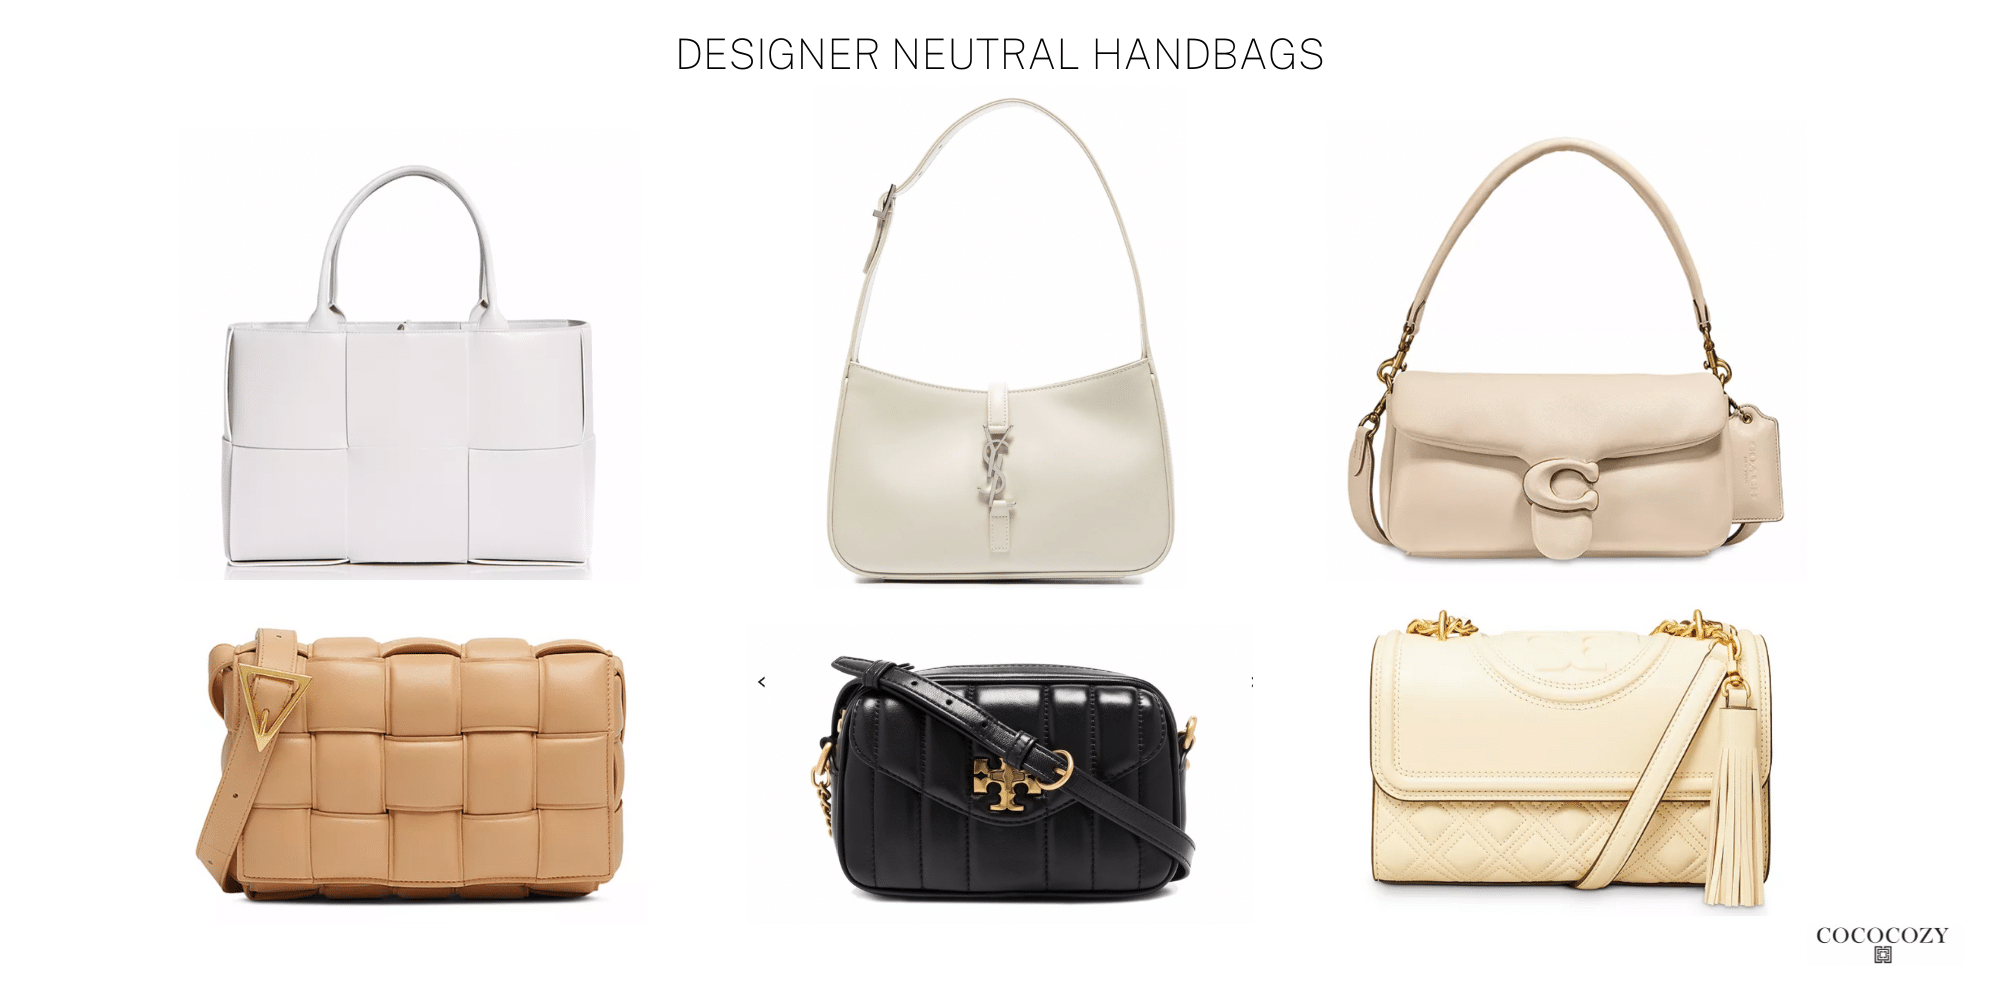 Alt tag for neutral-handbags-designer-cococozy